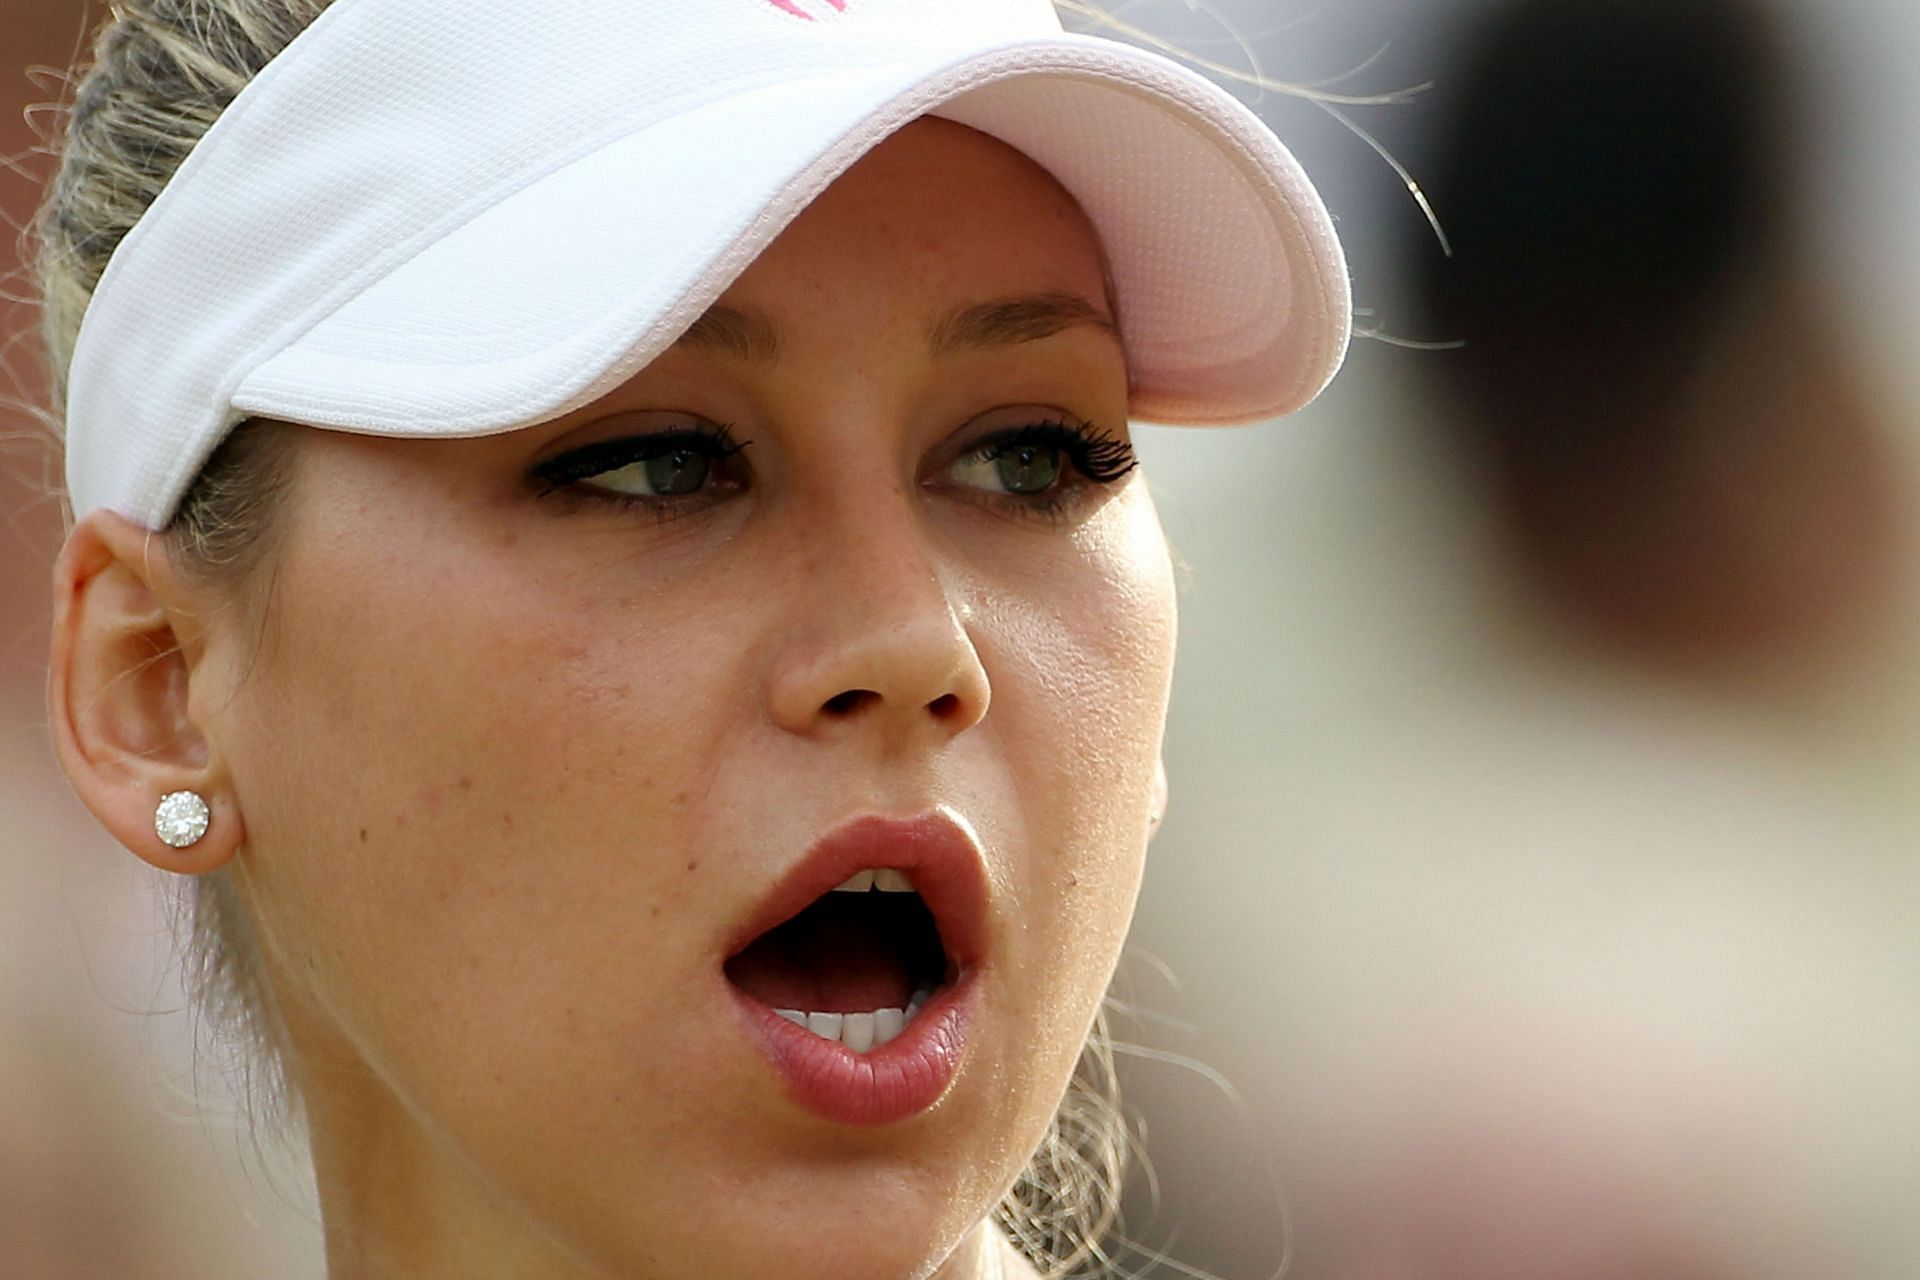 Anna Kournikova pictured during the 2010 Wimbledon Championships